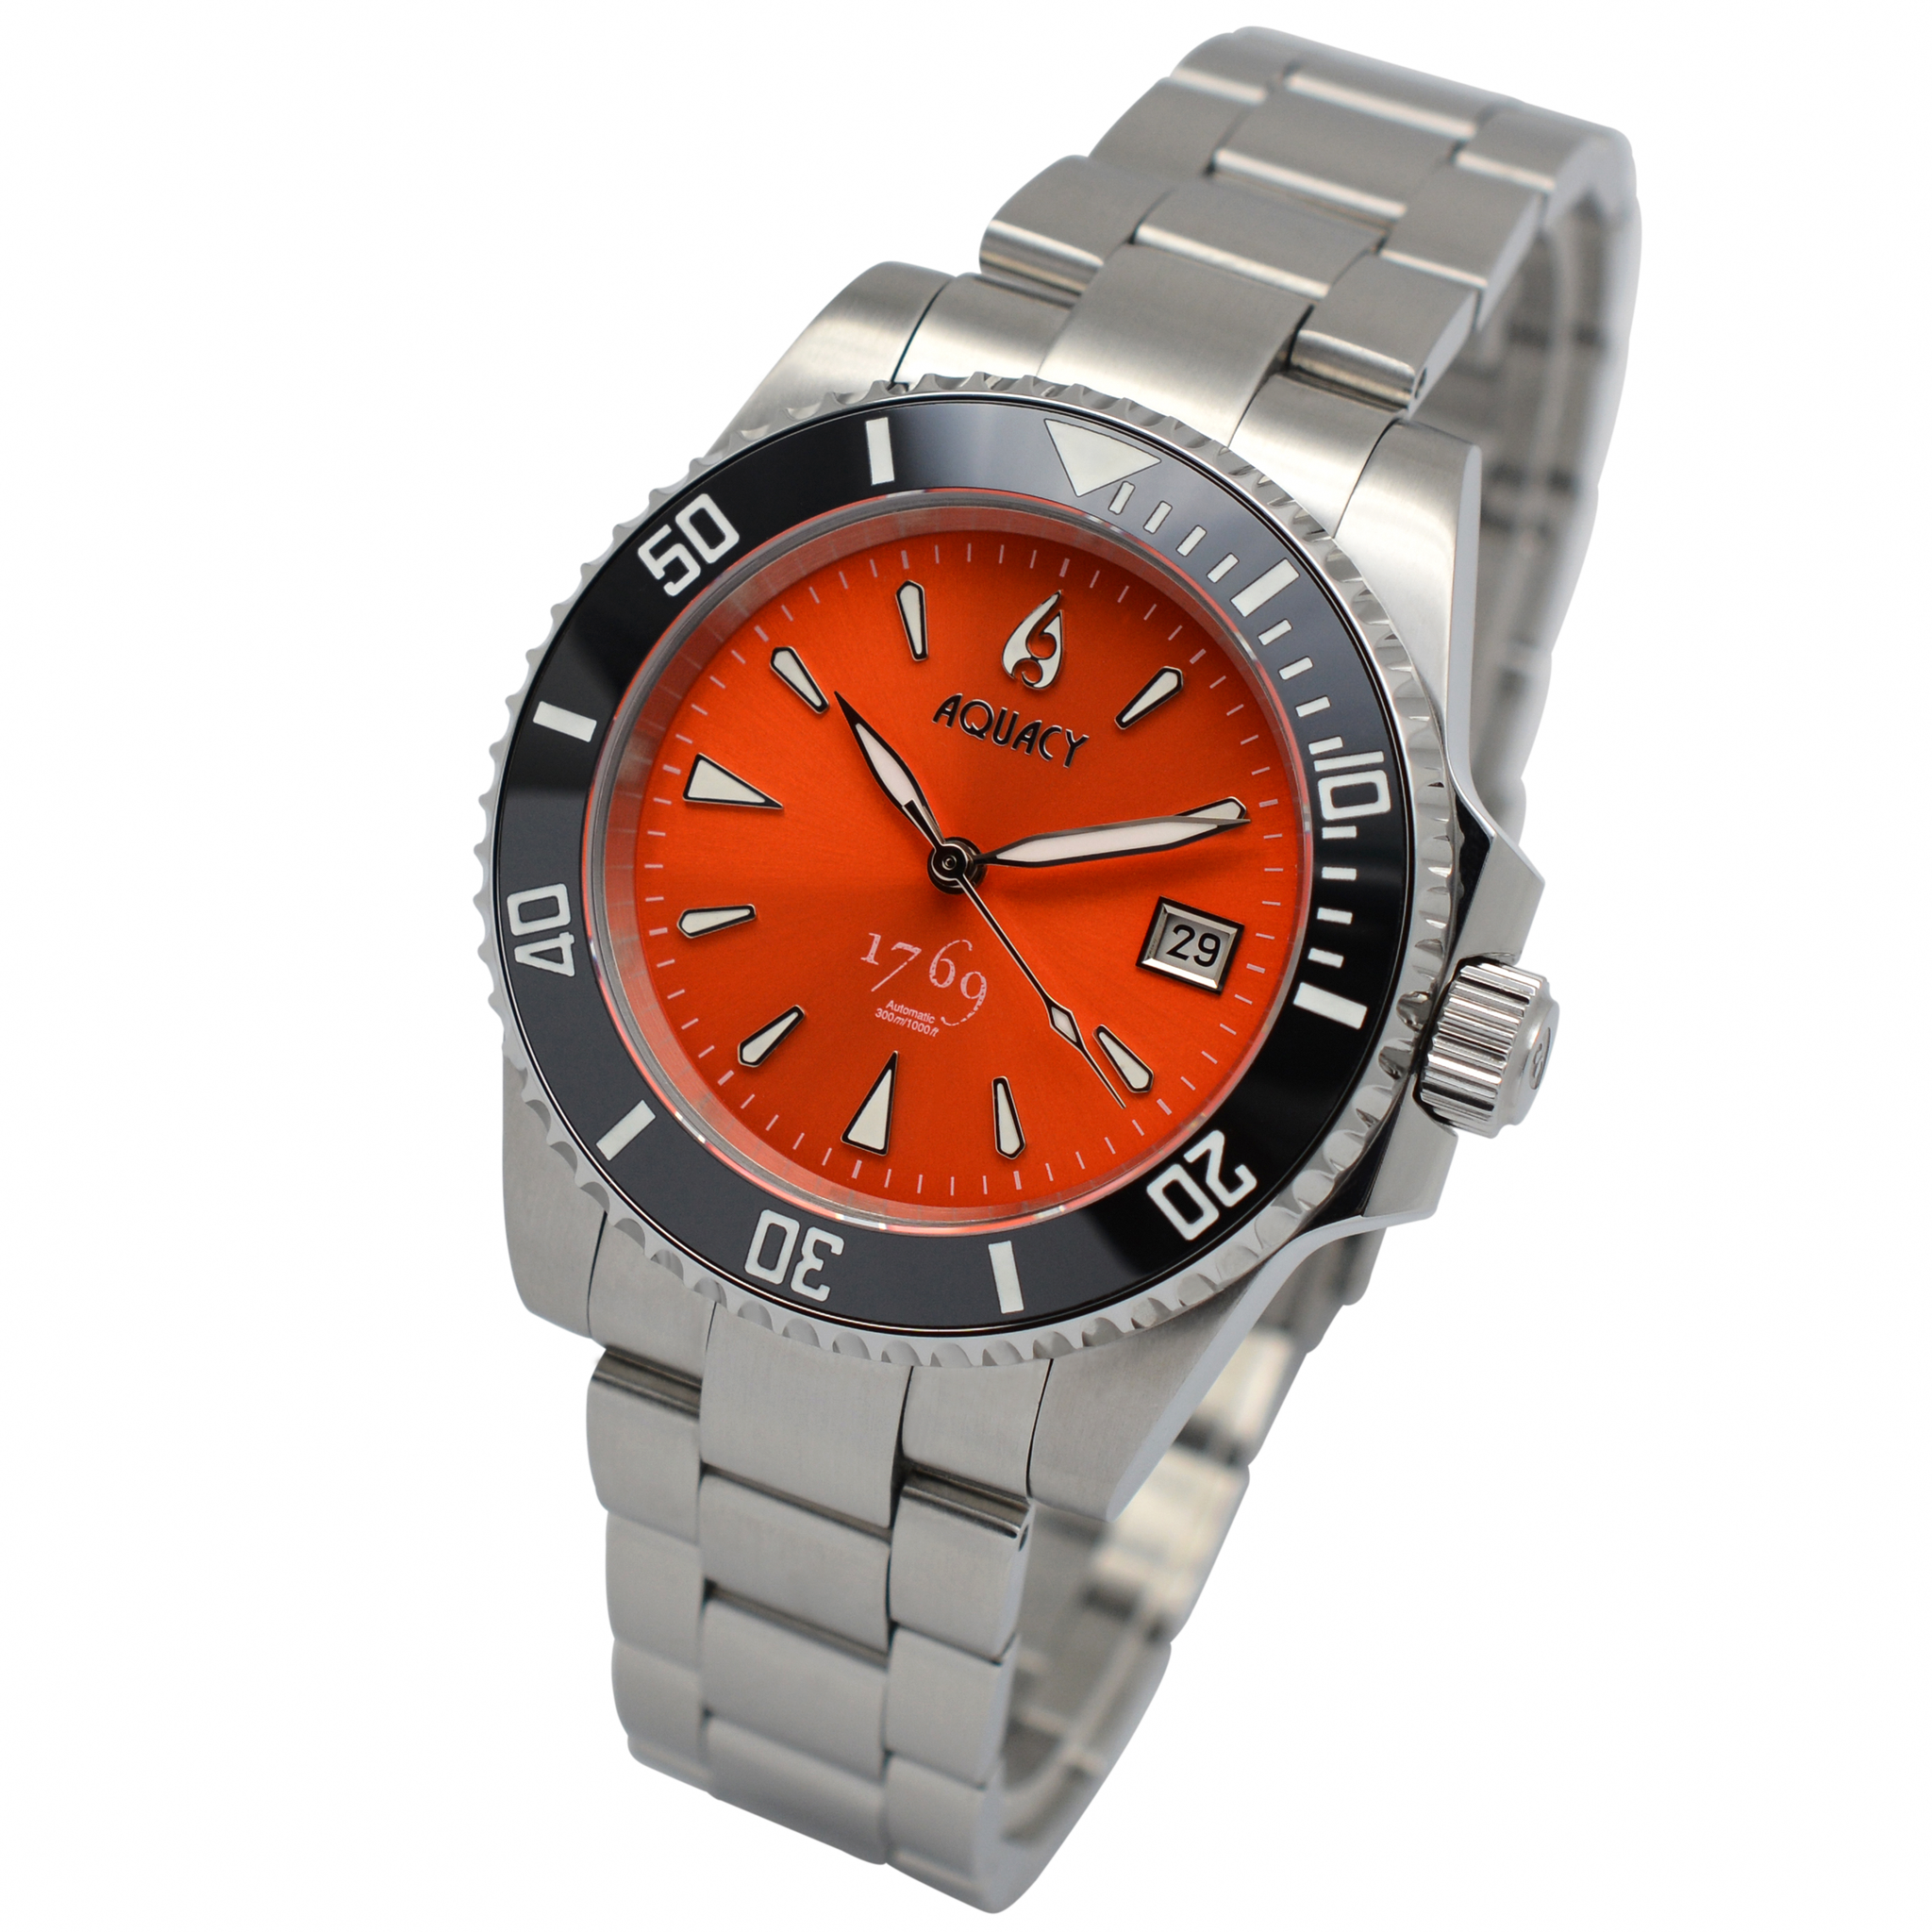 Buy Orange Dial Diver Watch Online, Orange Diver Watches for Sale ...